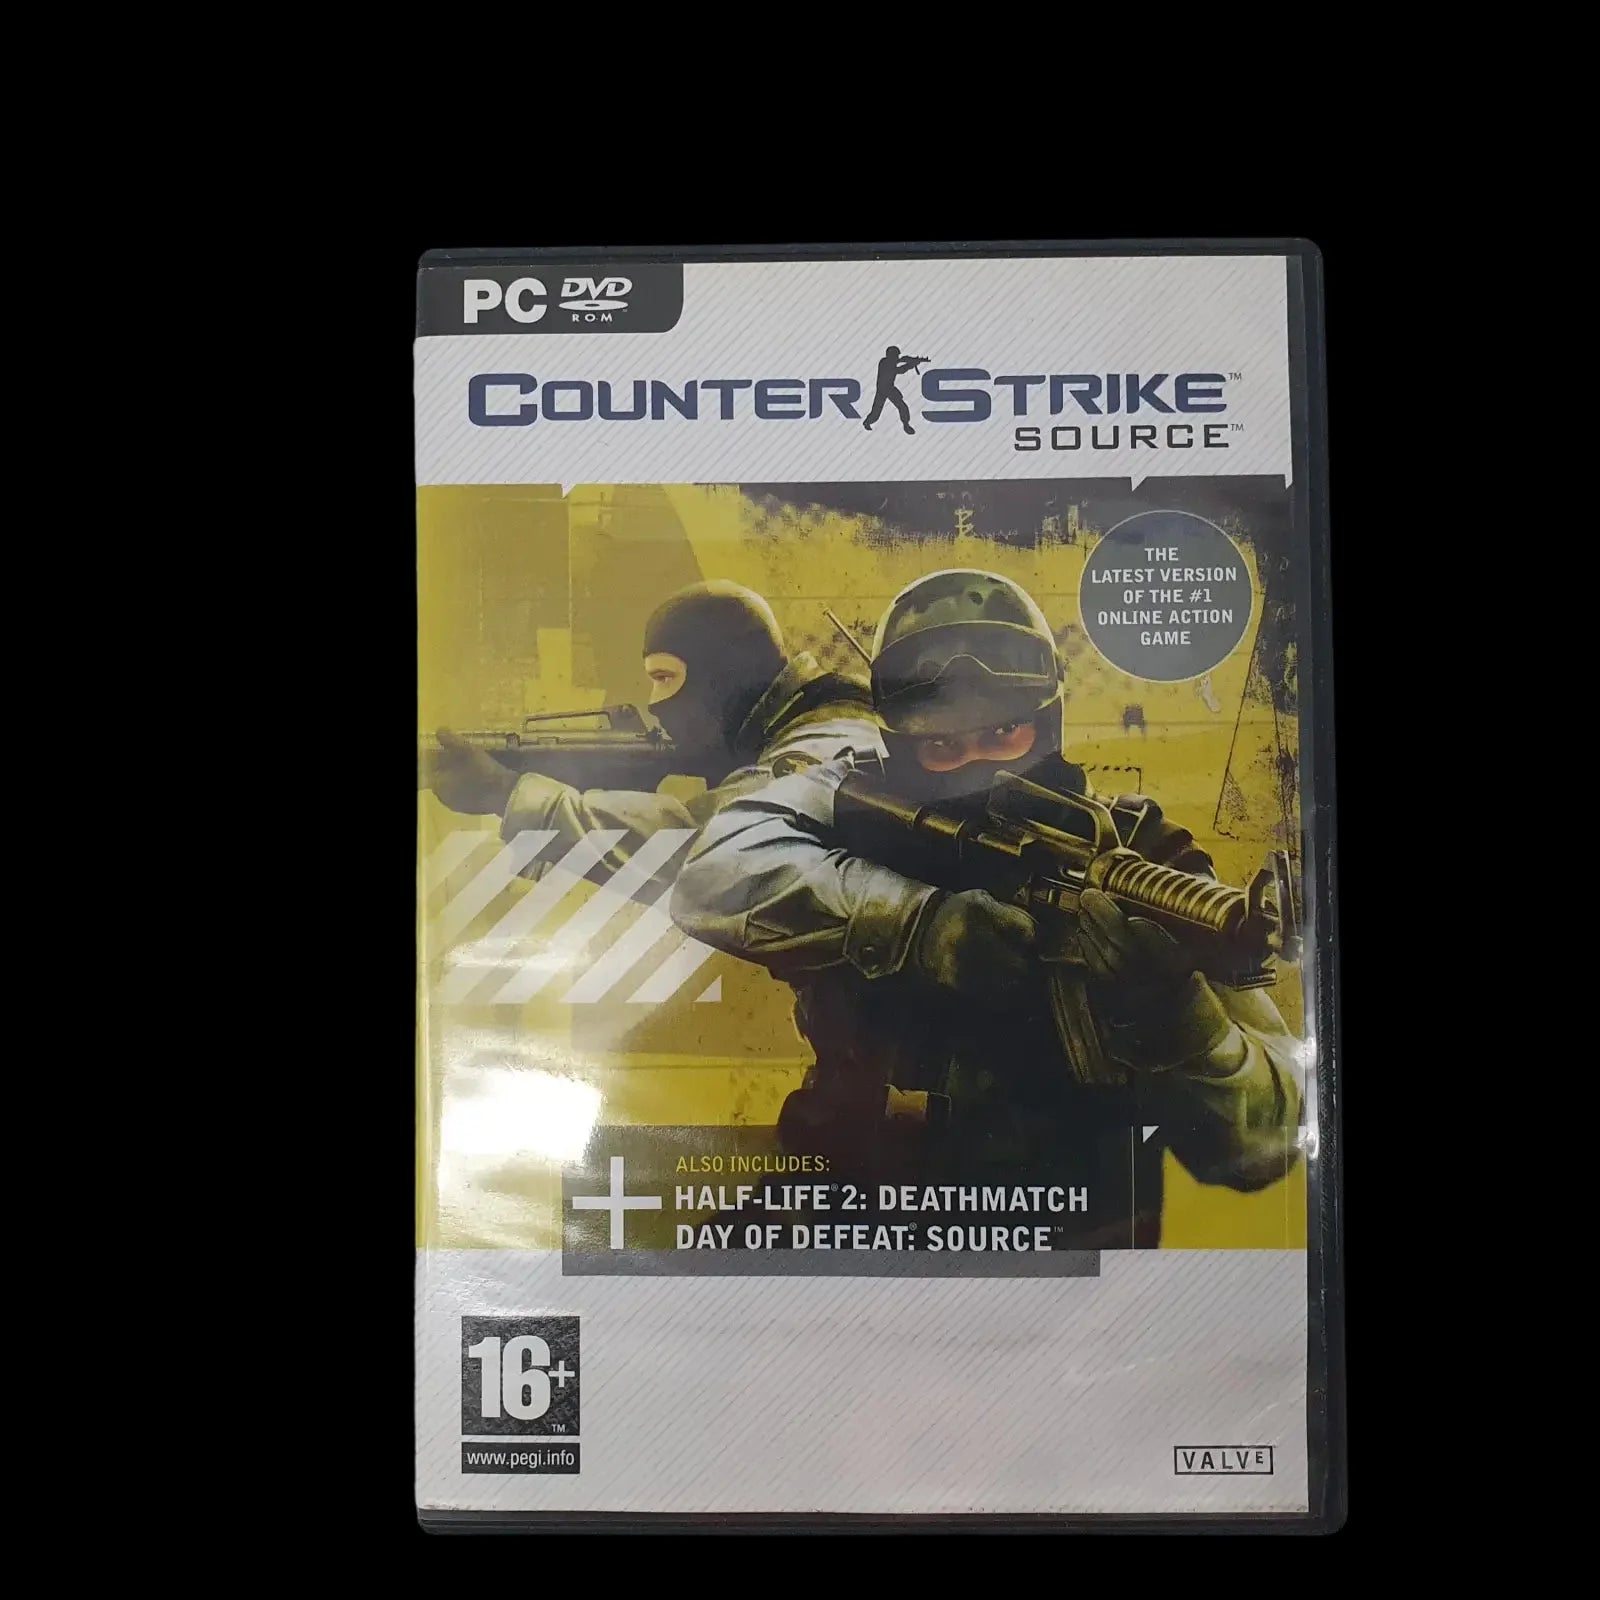 Counterstrike Source Pc Valve 2005 Video Game Cib - Games